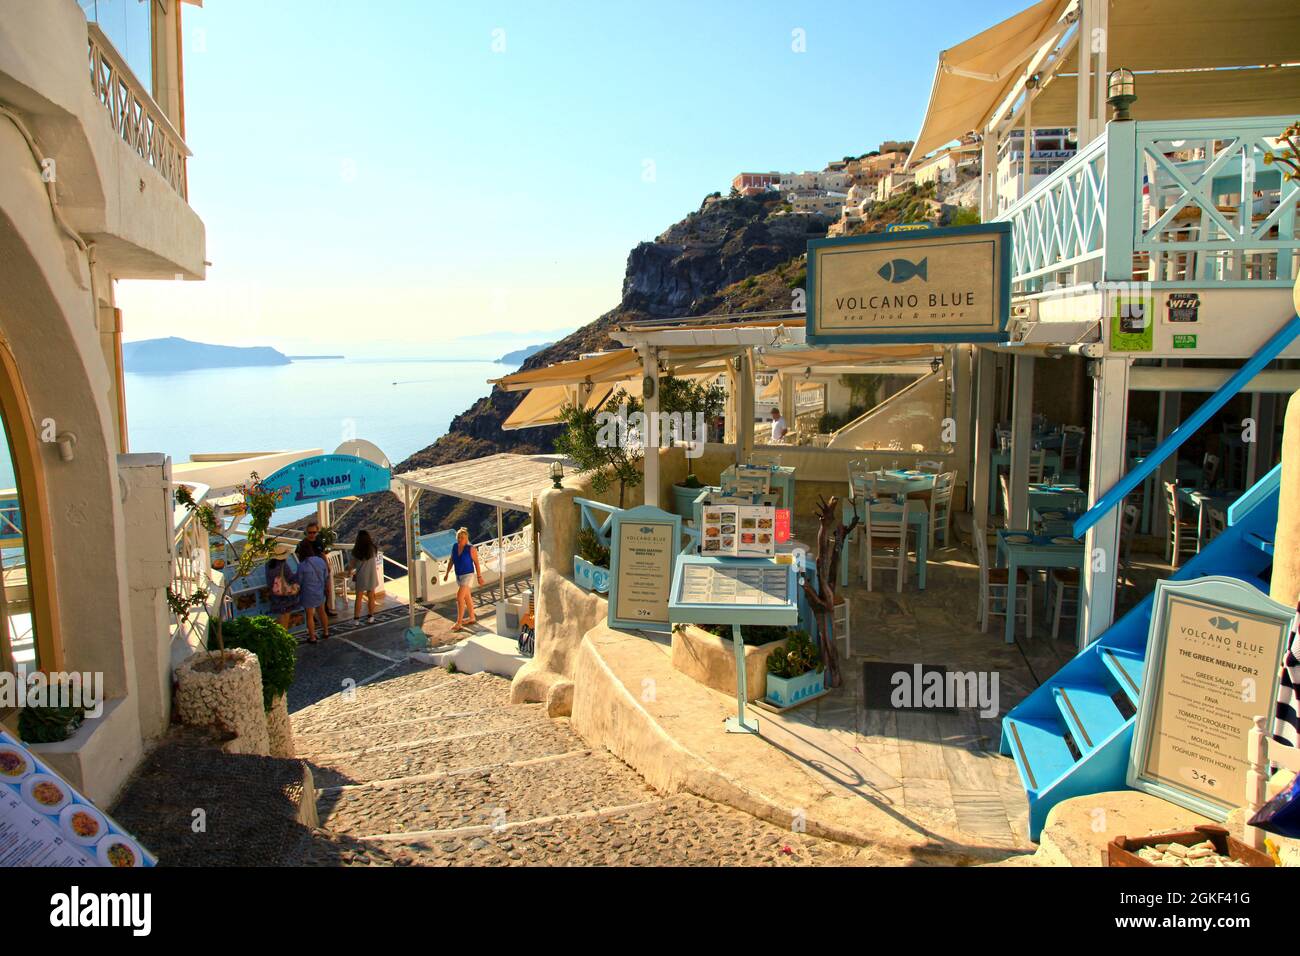 Volcano Blue and Fanari restaurants in Fira, Santorini. Stock Photo